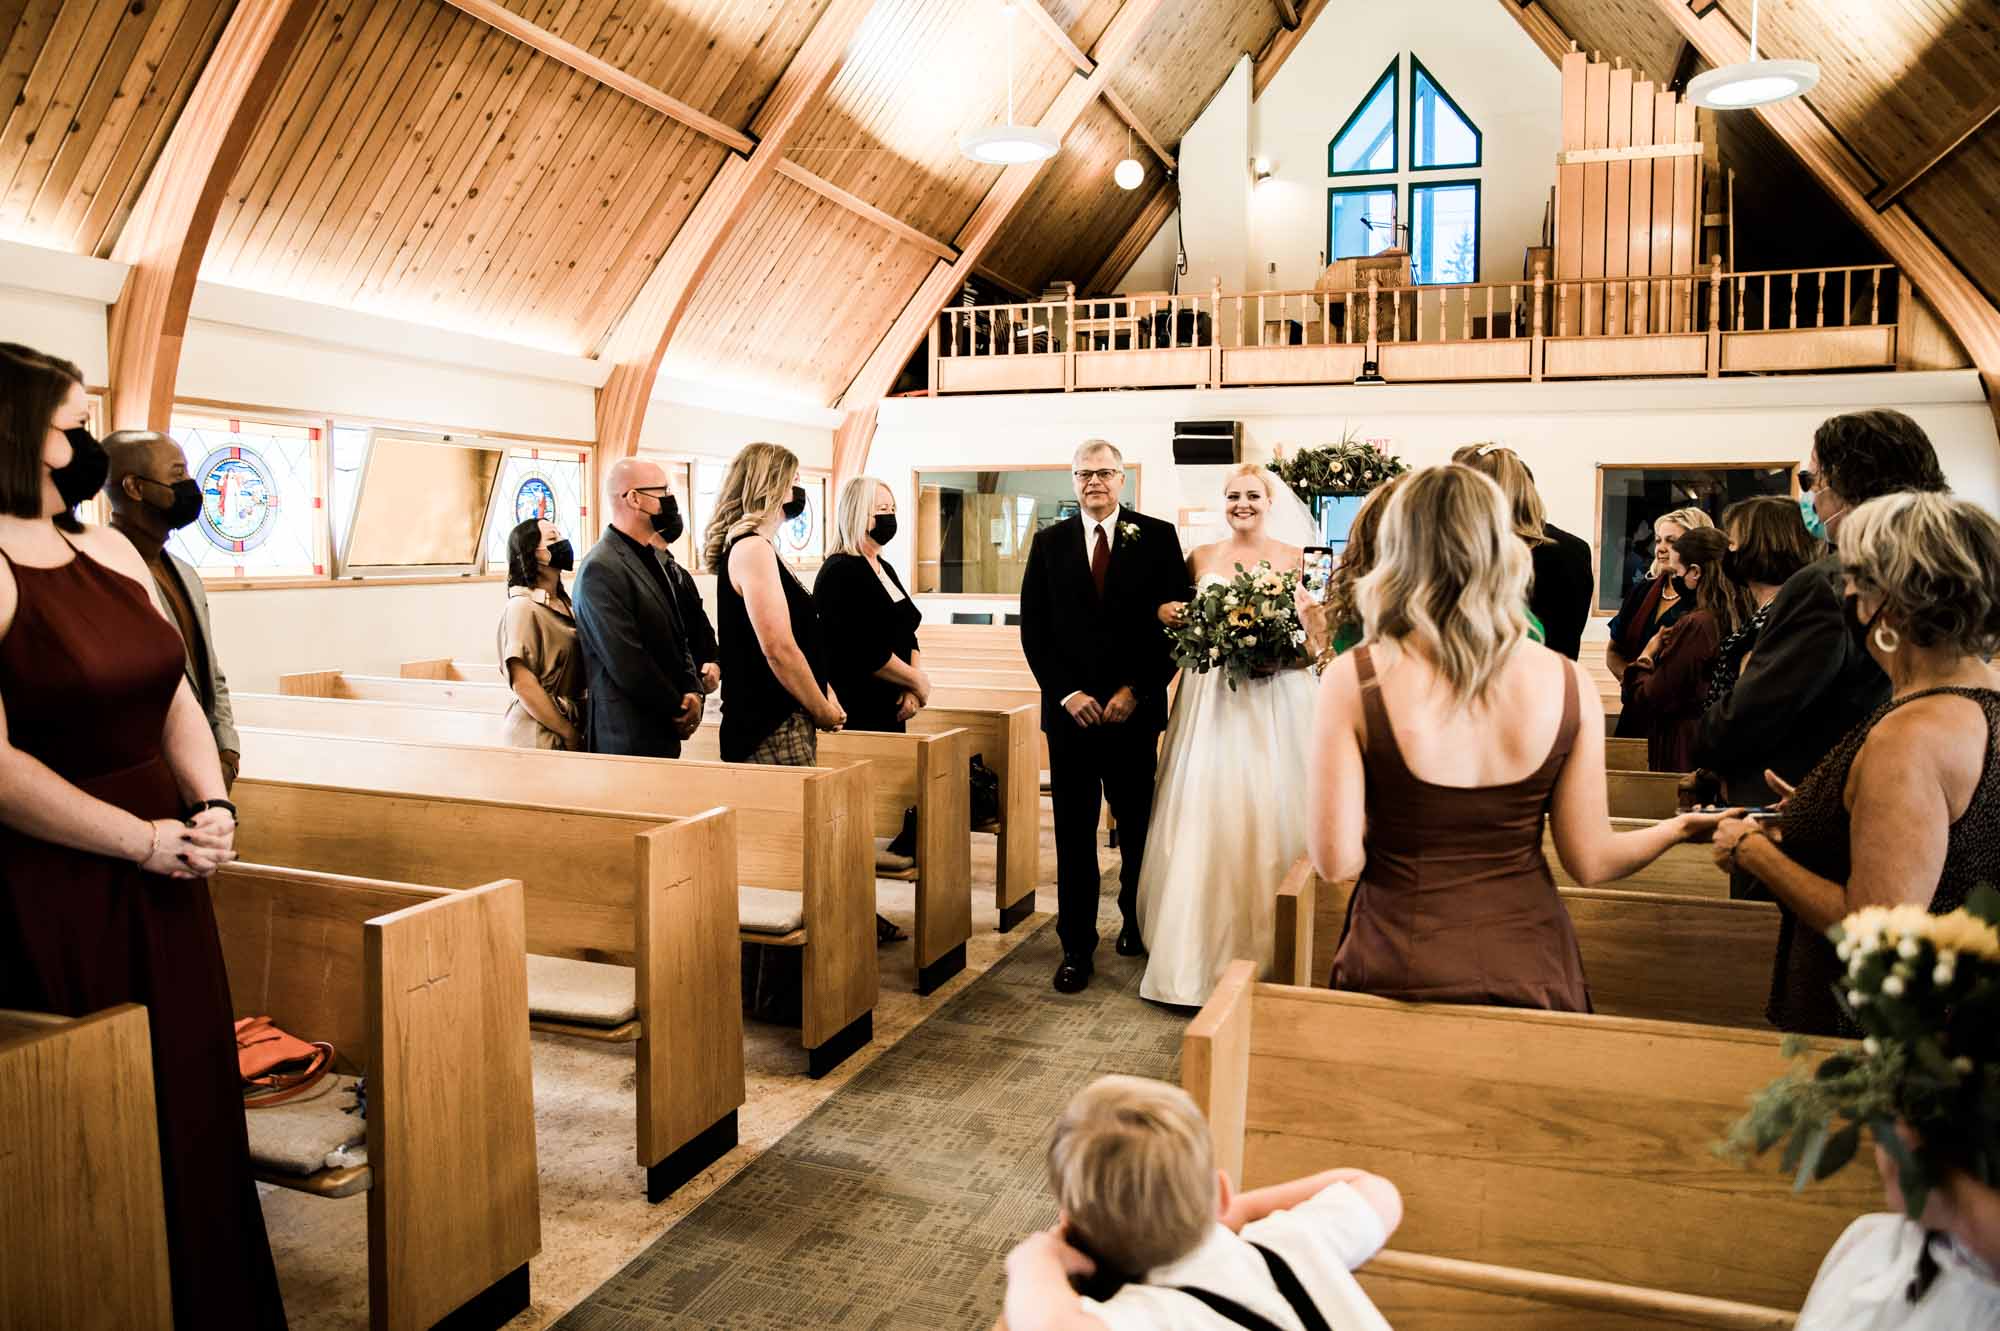 Calgary wedding photographer, bride and groom on their wedding day at a church in Calgary